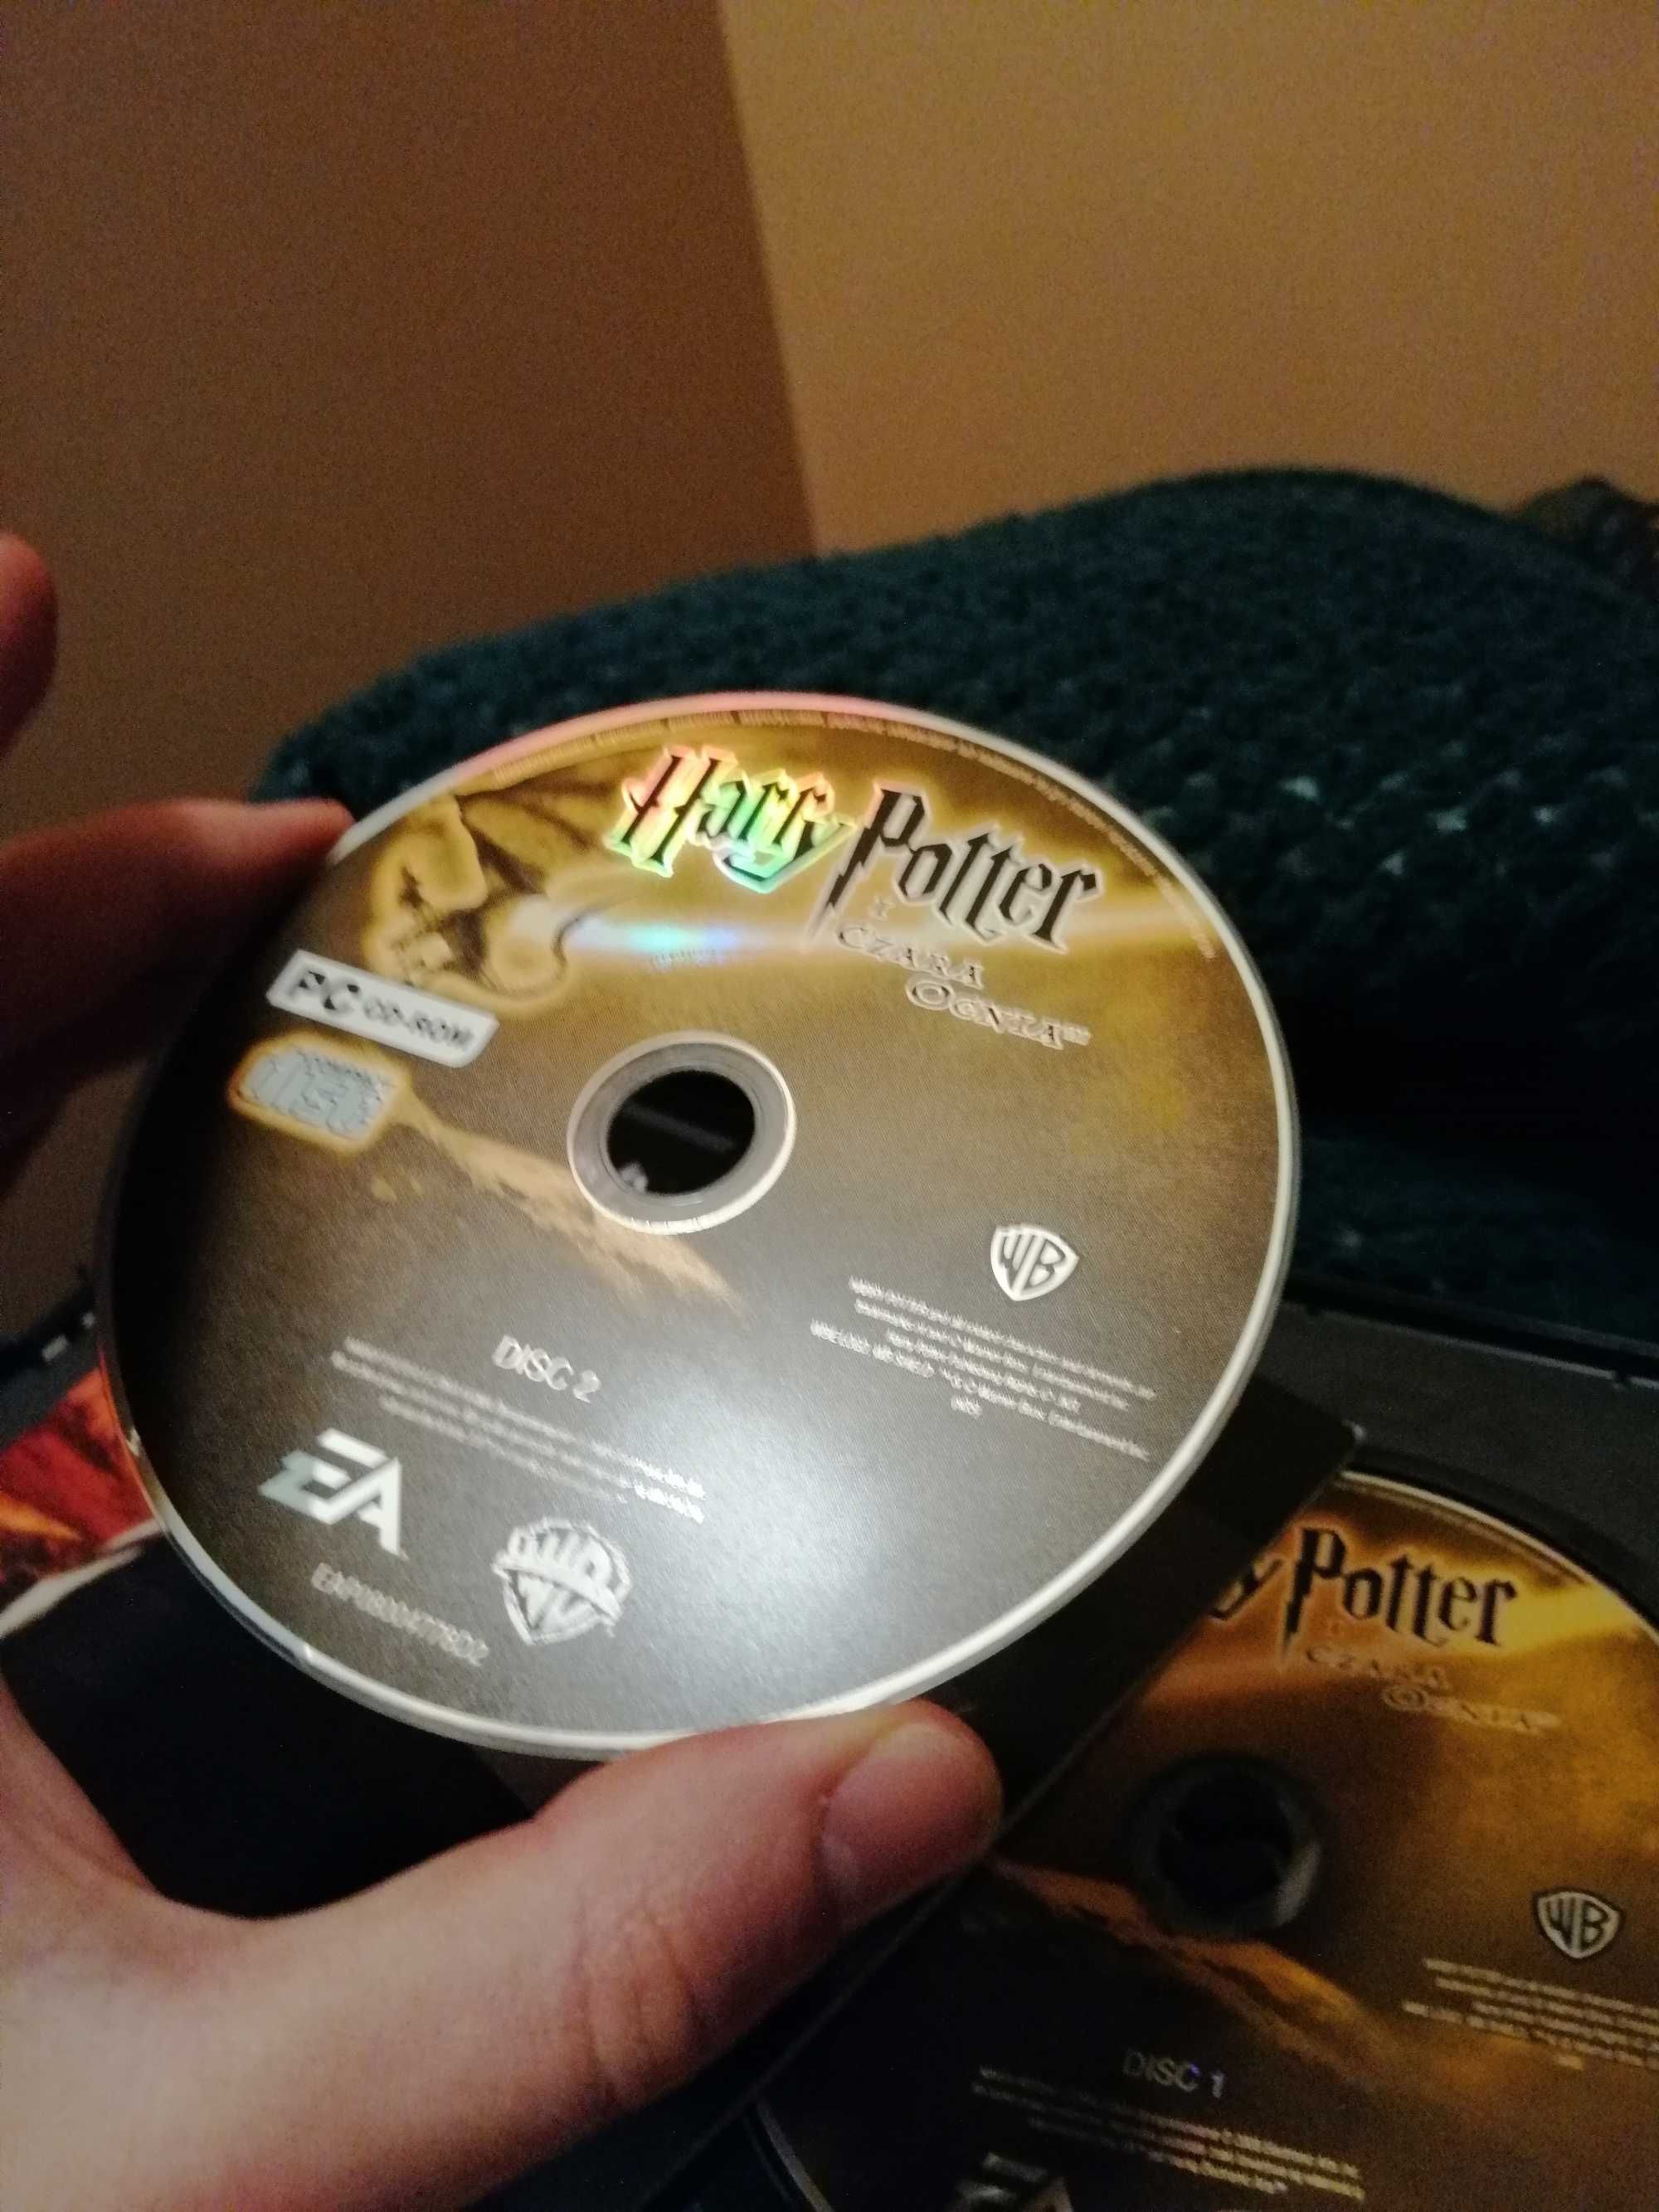 Harry Potter i Czara Ognia PC 2 CD